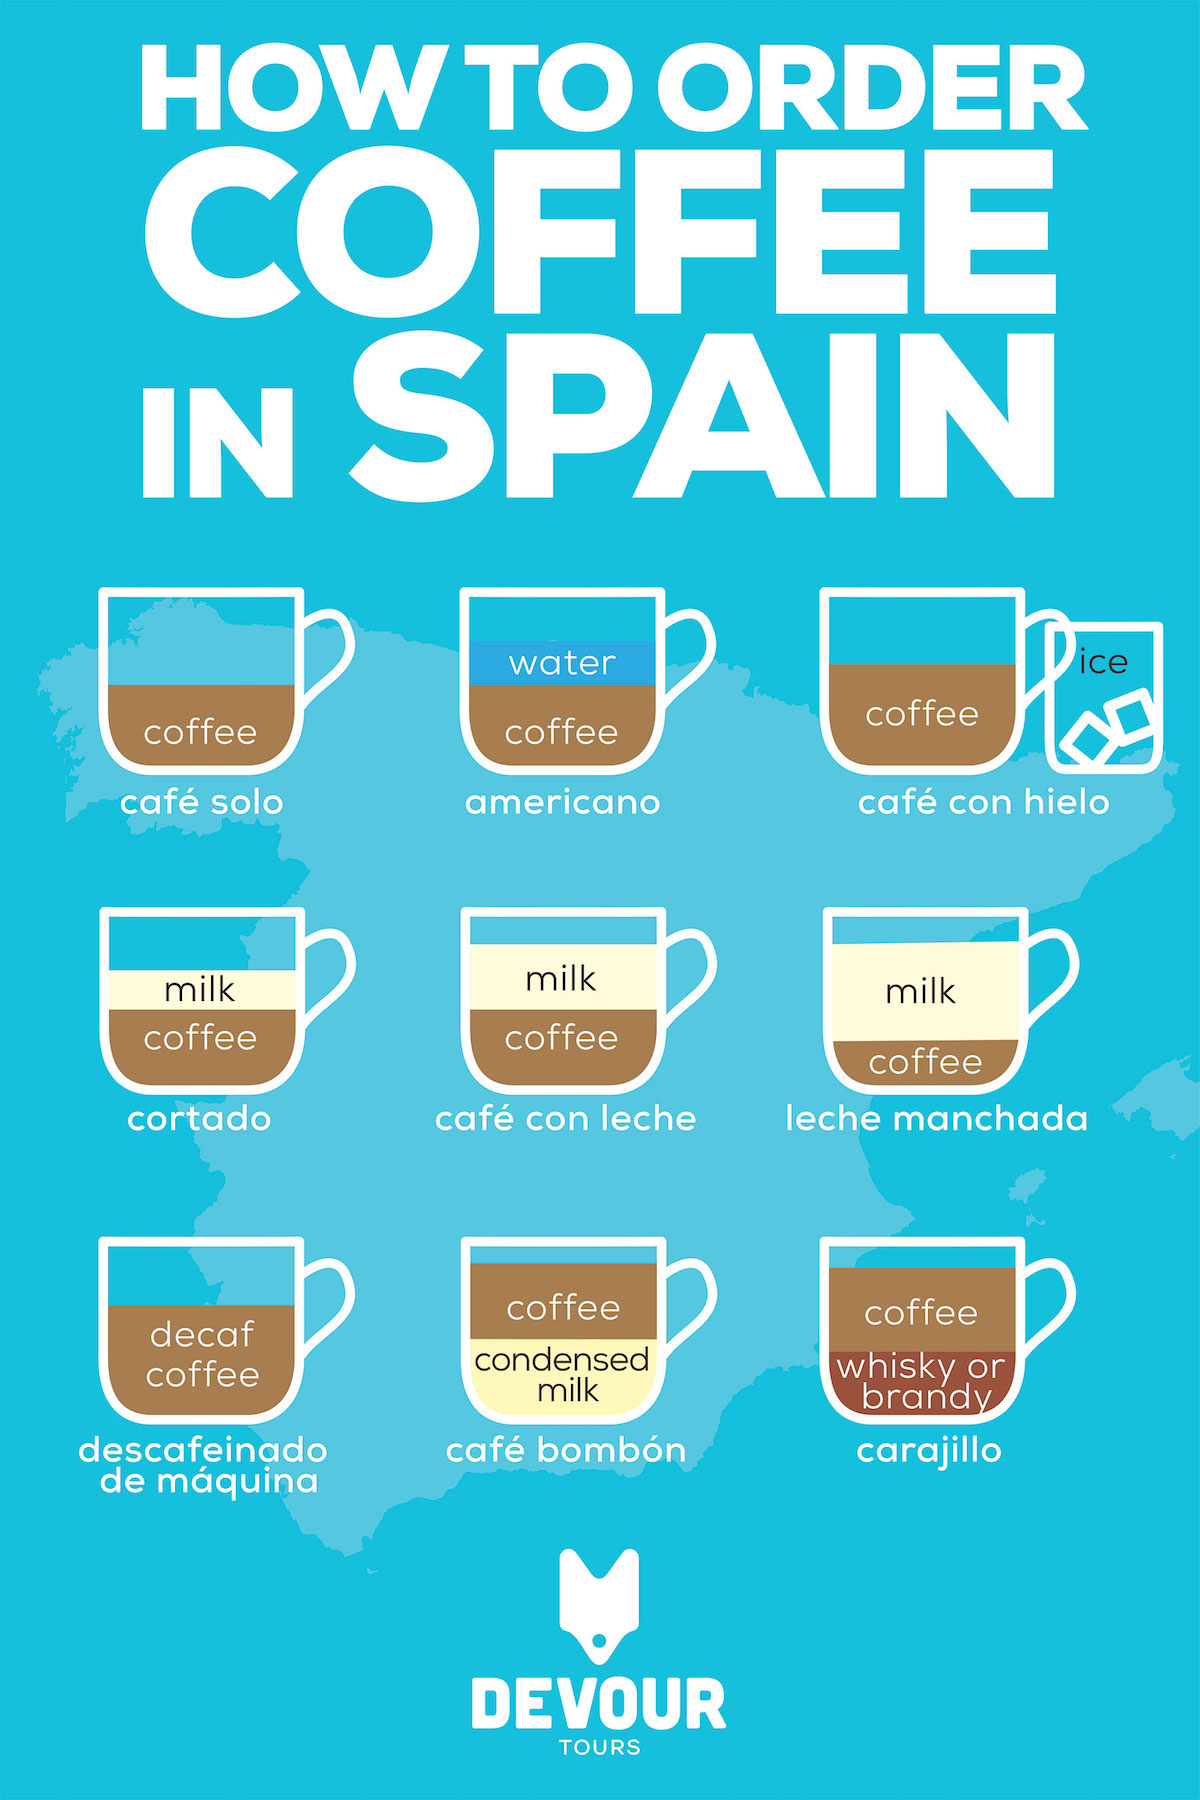 https://assets2.devourtours.com/wp-content/uploads/spanish-coffee-infographic-1-1.jpeg